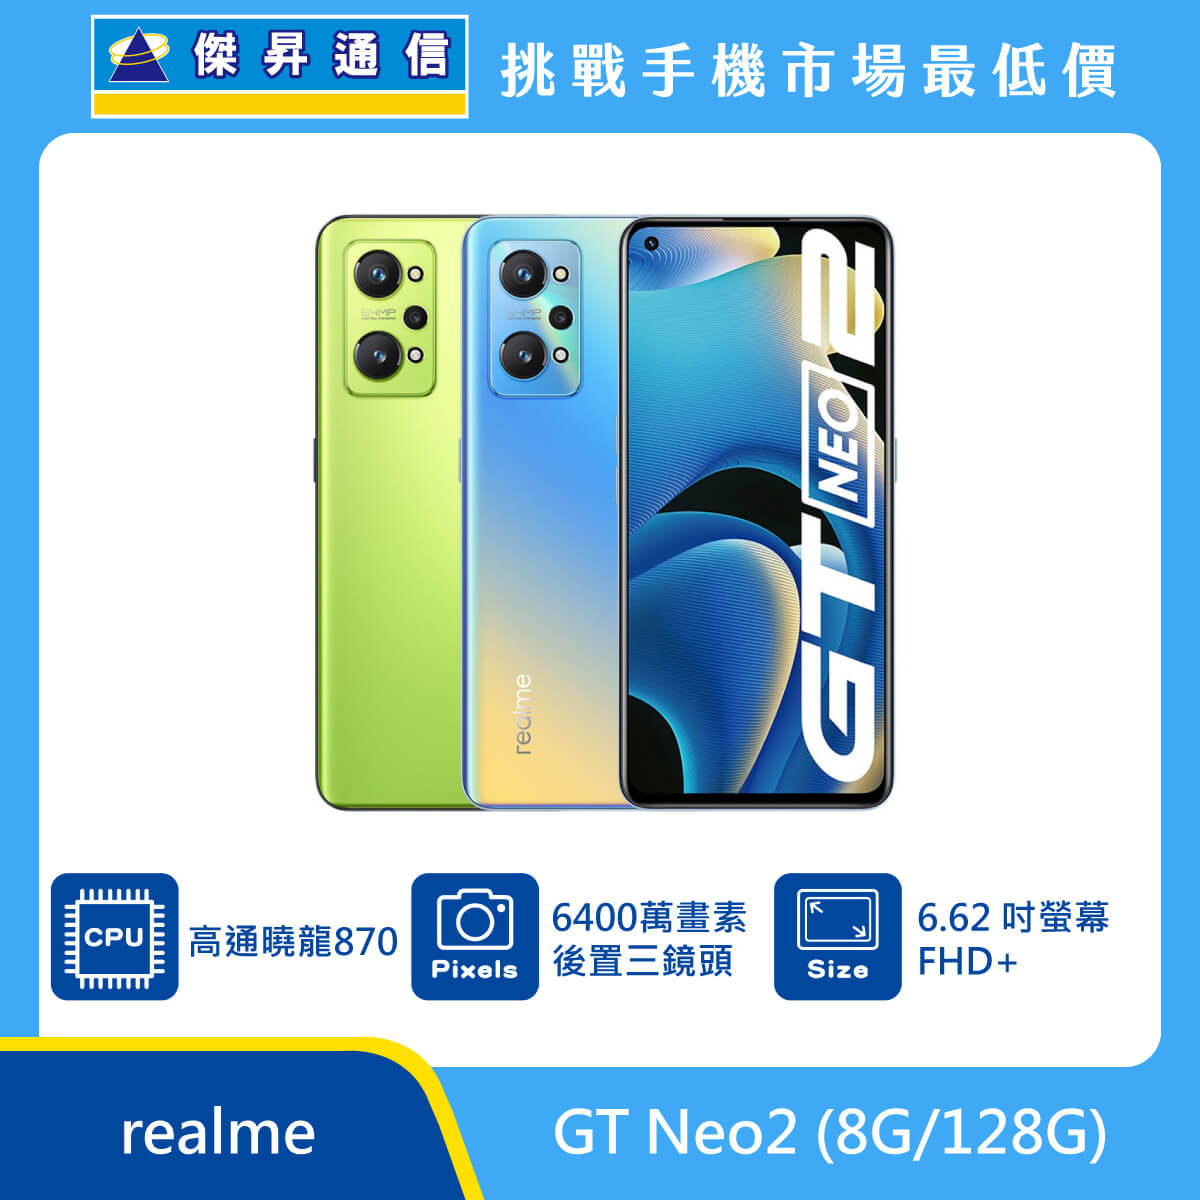 realme GT Neo2 (8G/128G)